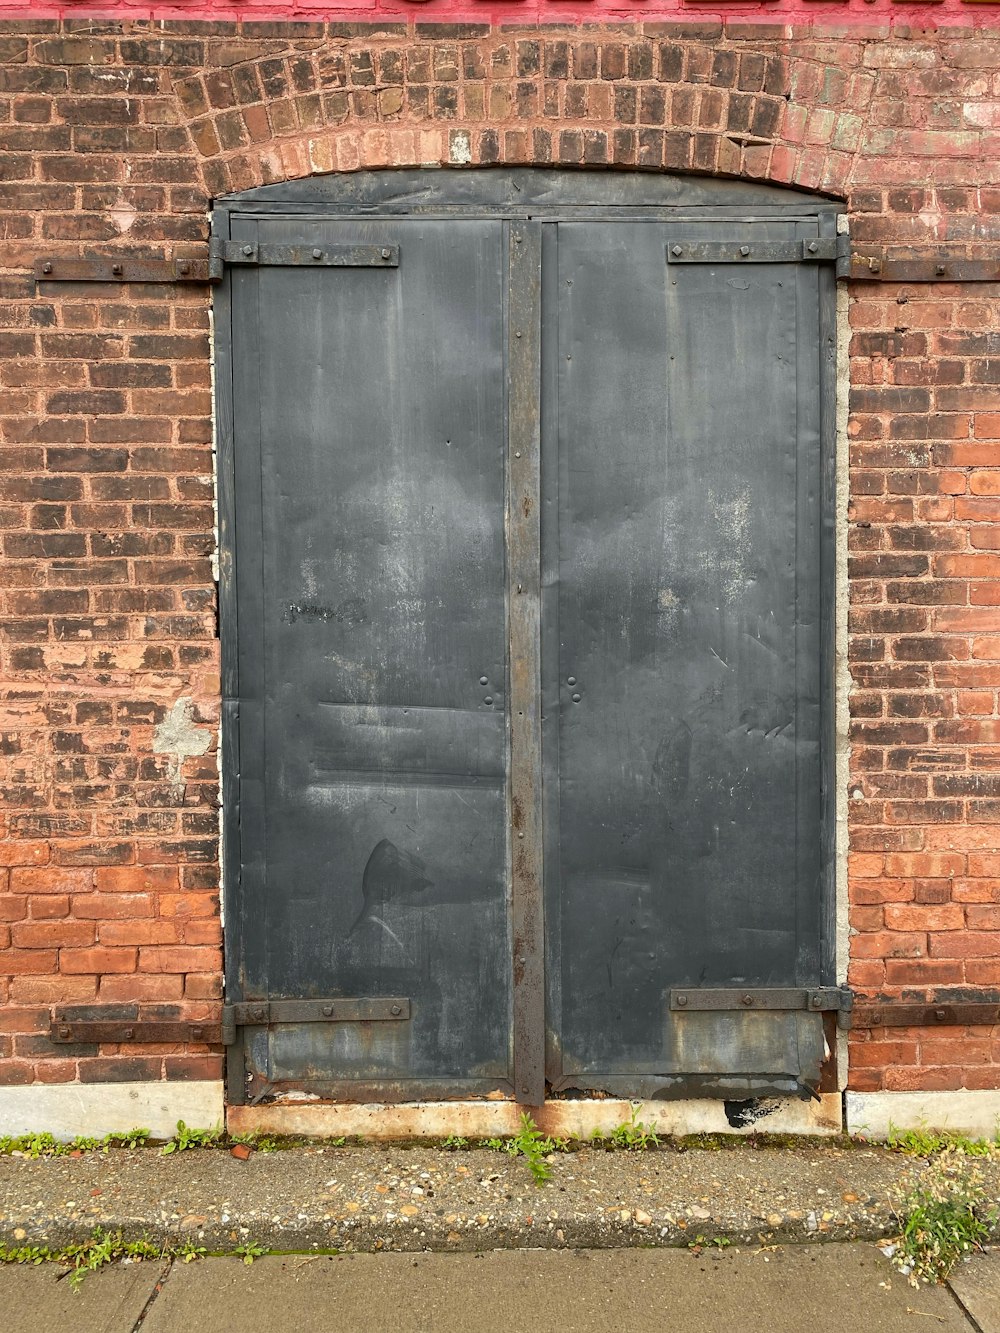 a brick building with a large metal door